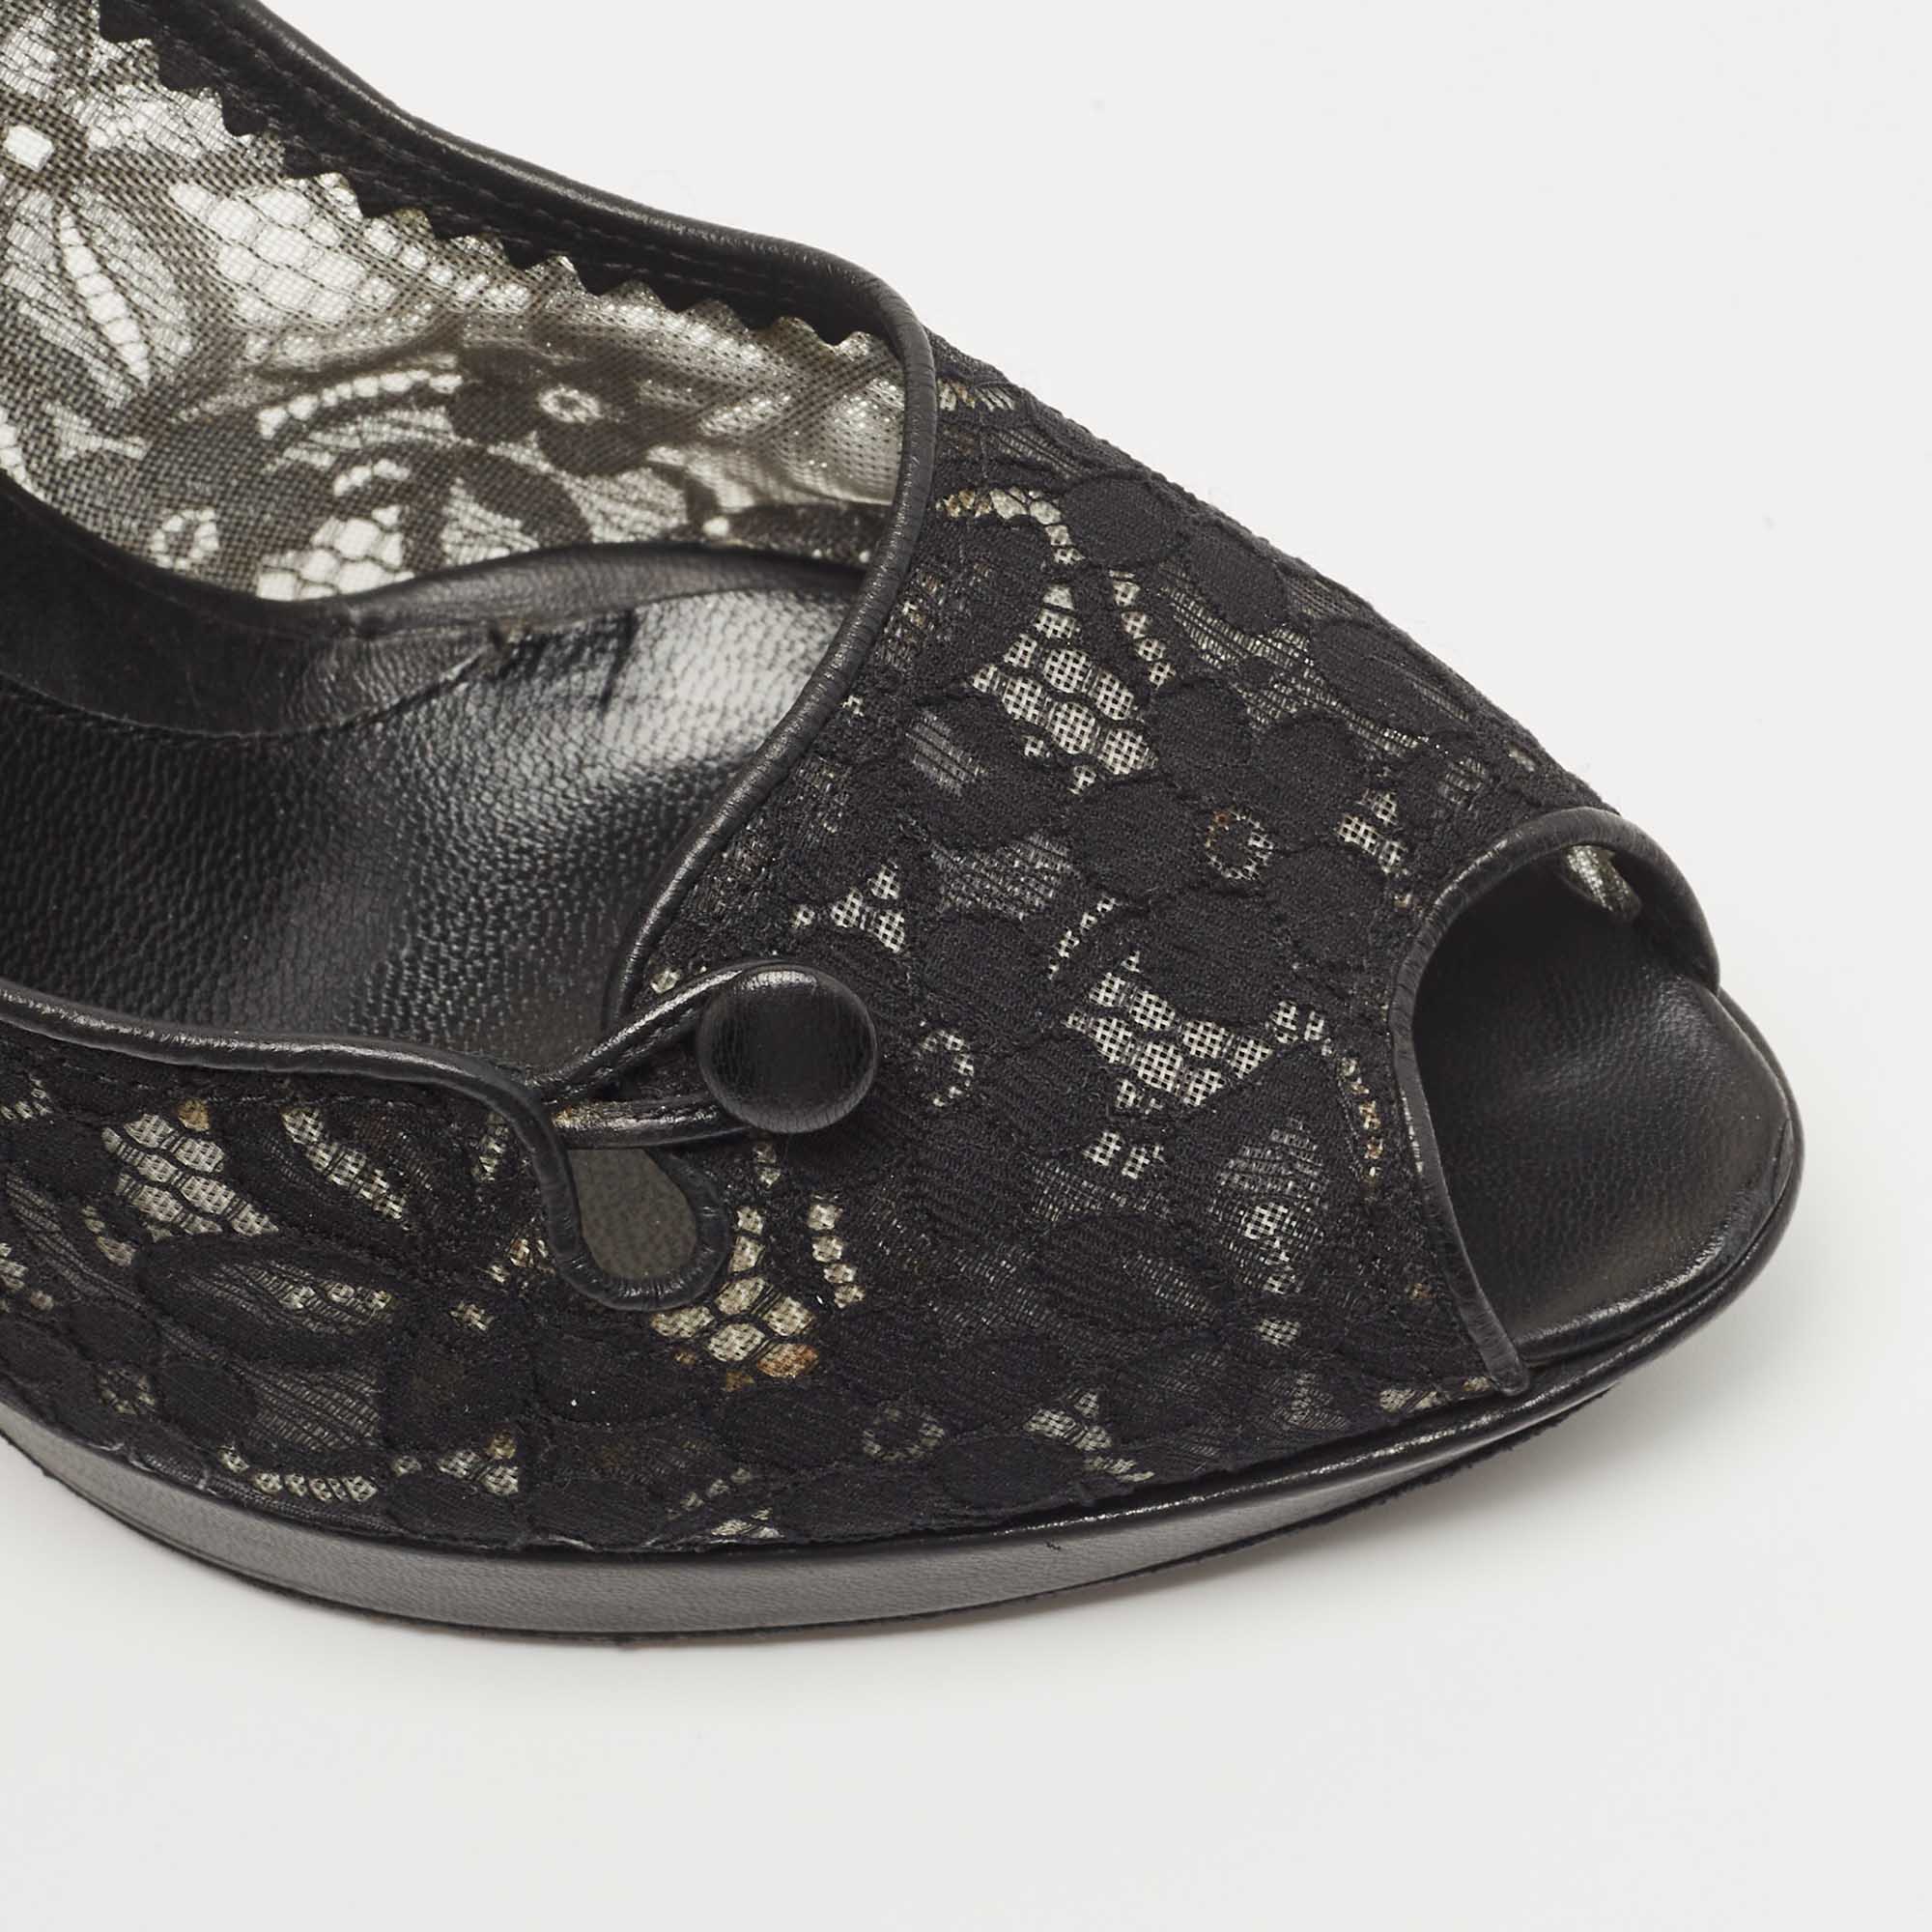 Fendi Black Lace And Leather Button Detail Peep Toe Pumps Size 40